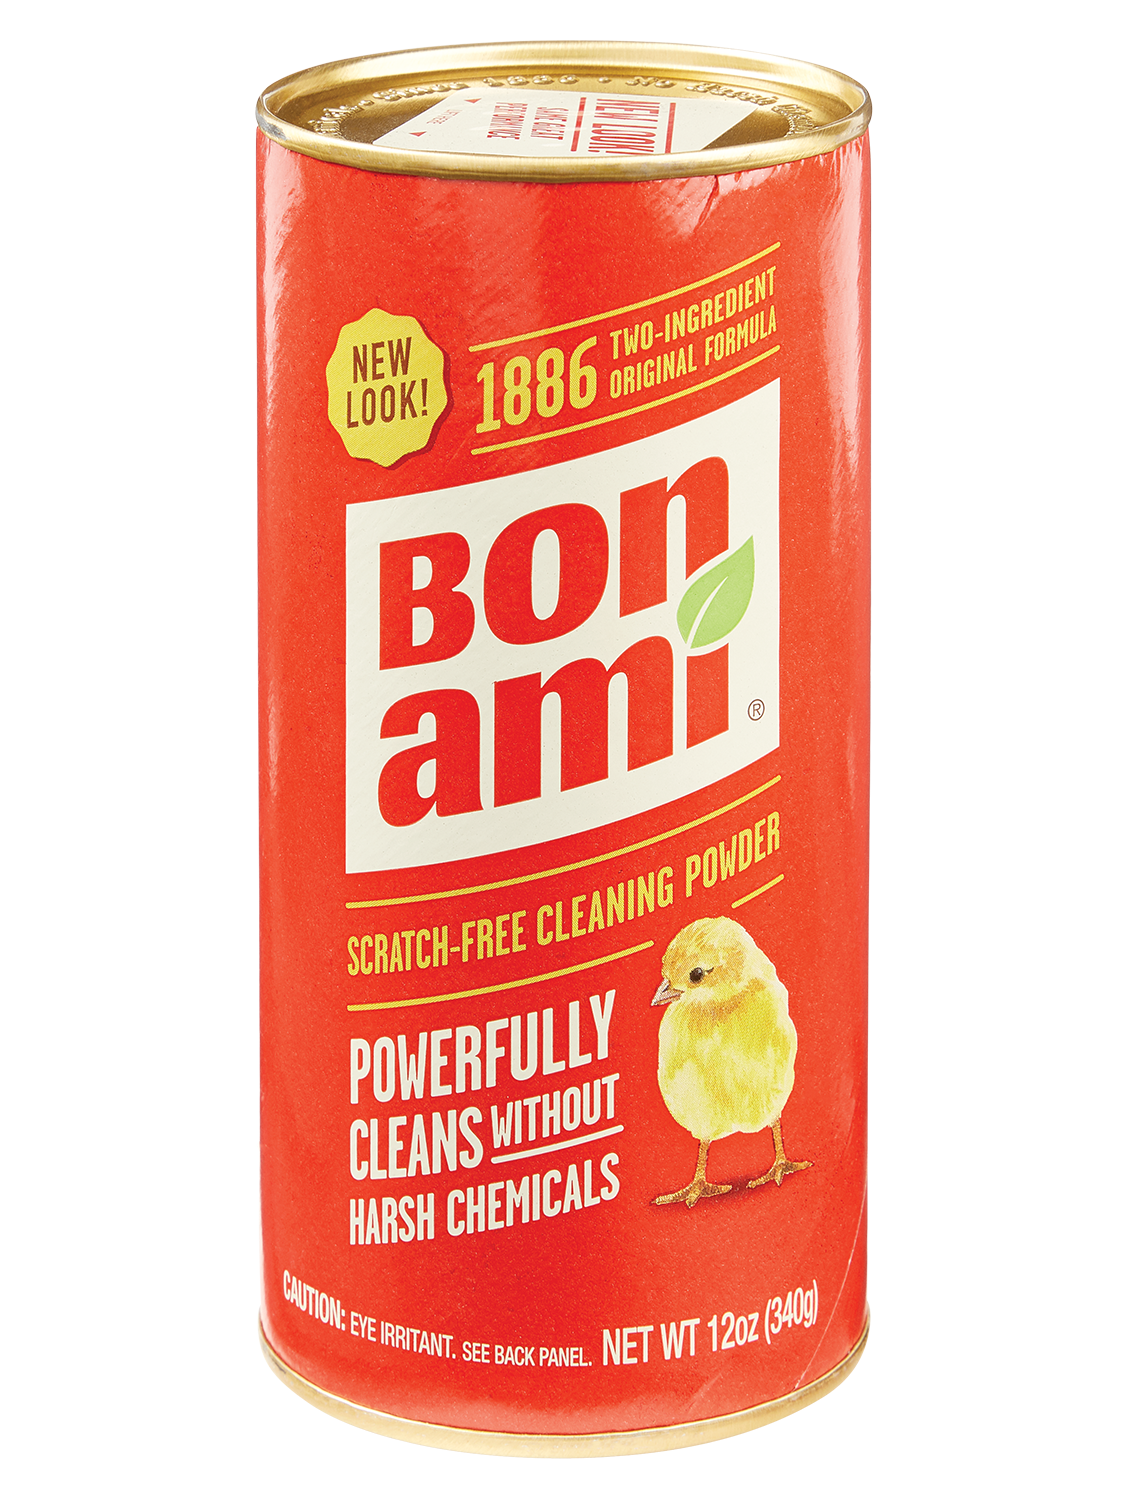 Bon Ami cleaner